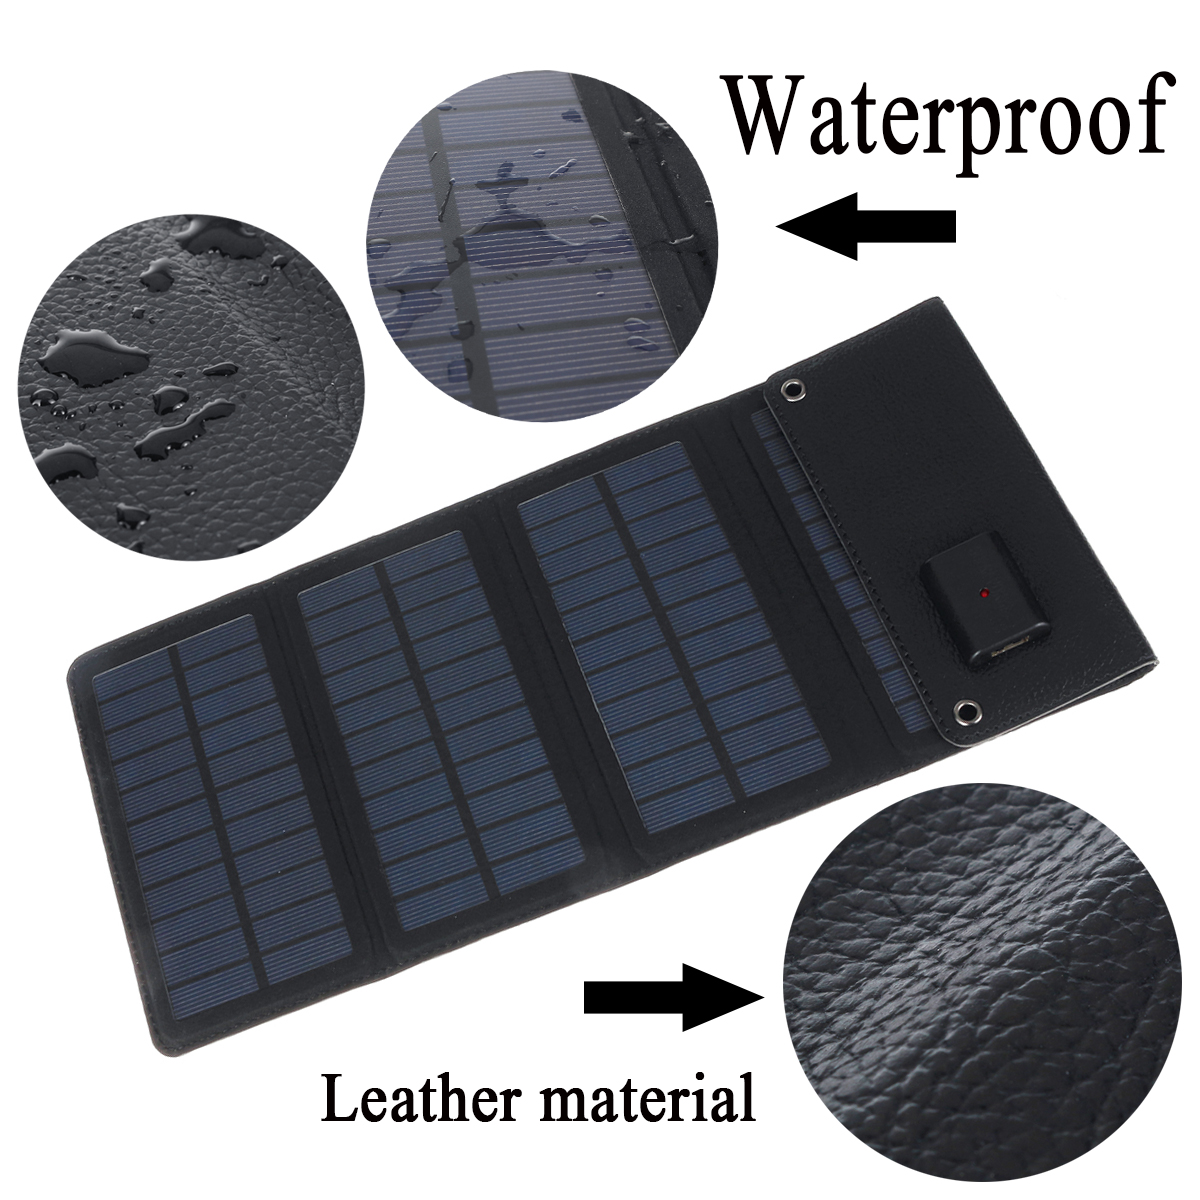 7W 5V Waterproof Foldable Mono-crystalline Silicon Solar Panel With LED Charging indicator & USB Interface 26